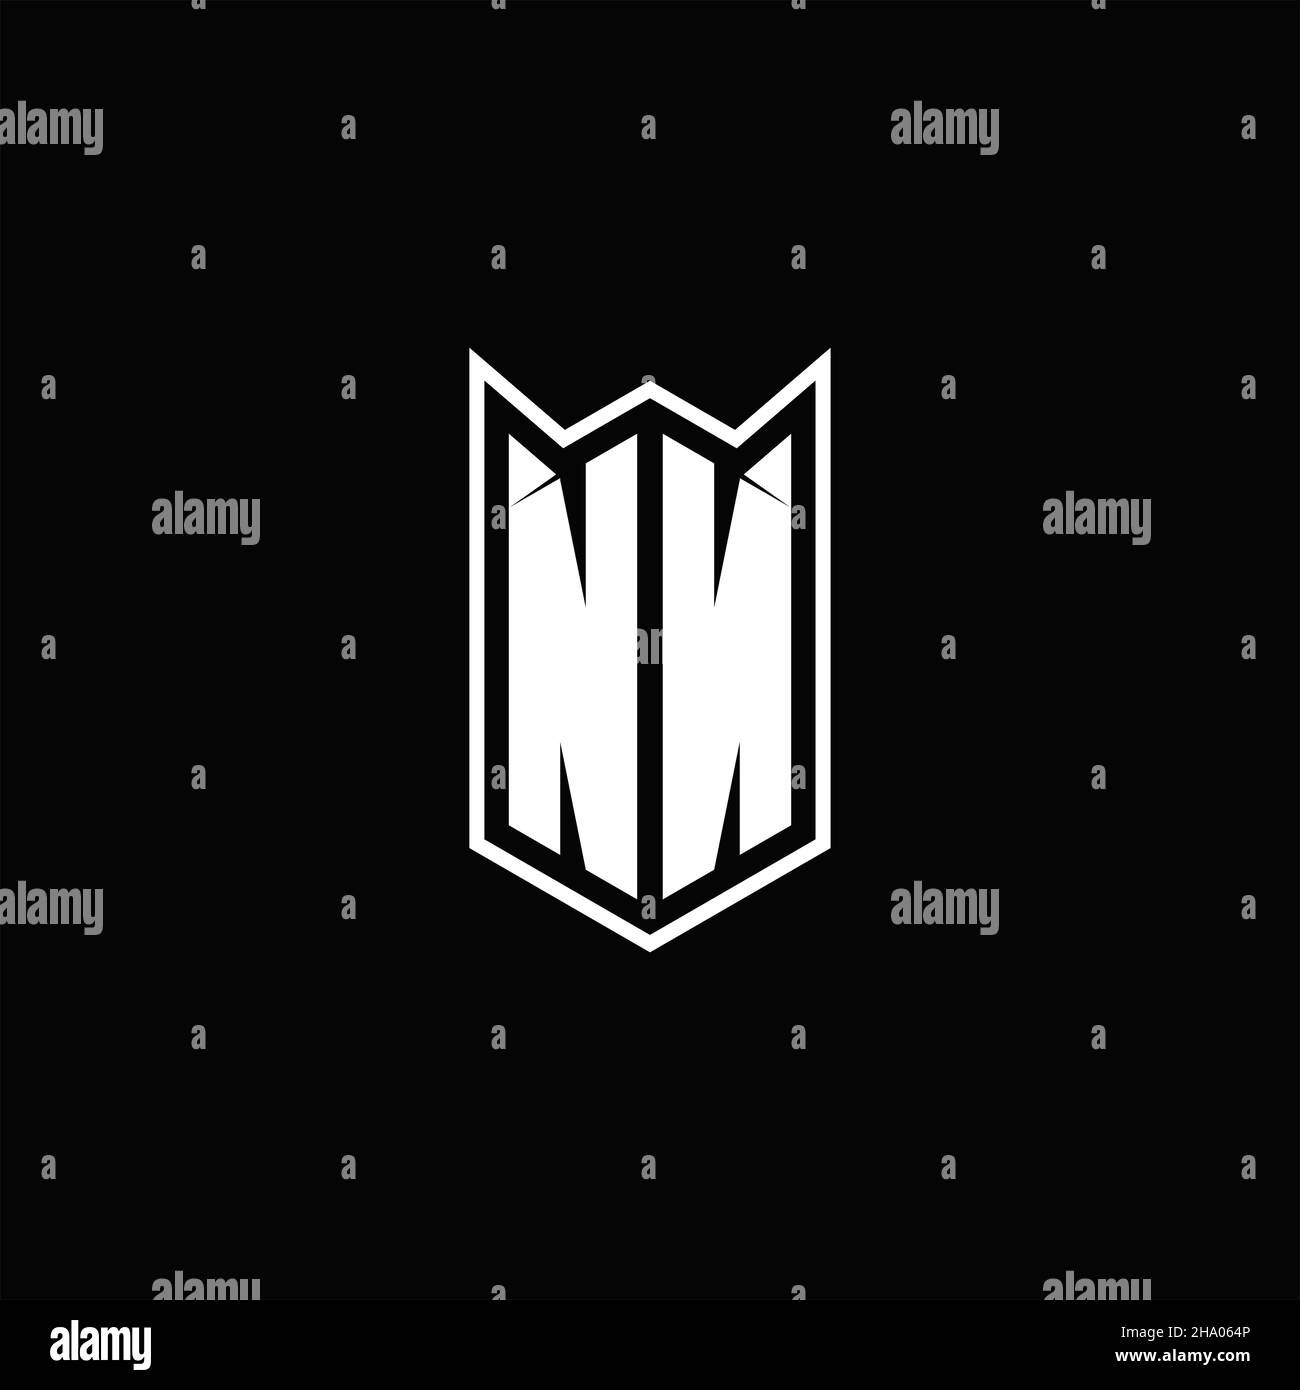 NN Logo monogram with shield shape designs template vector icon modern Stock Vector